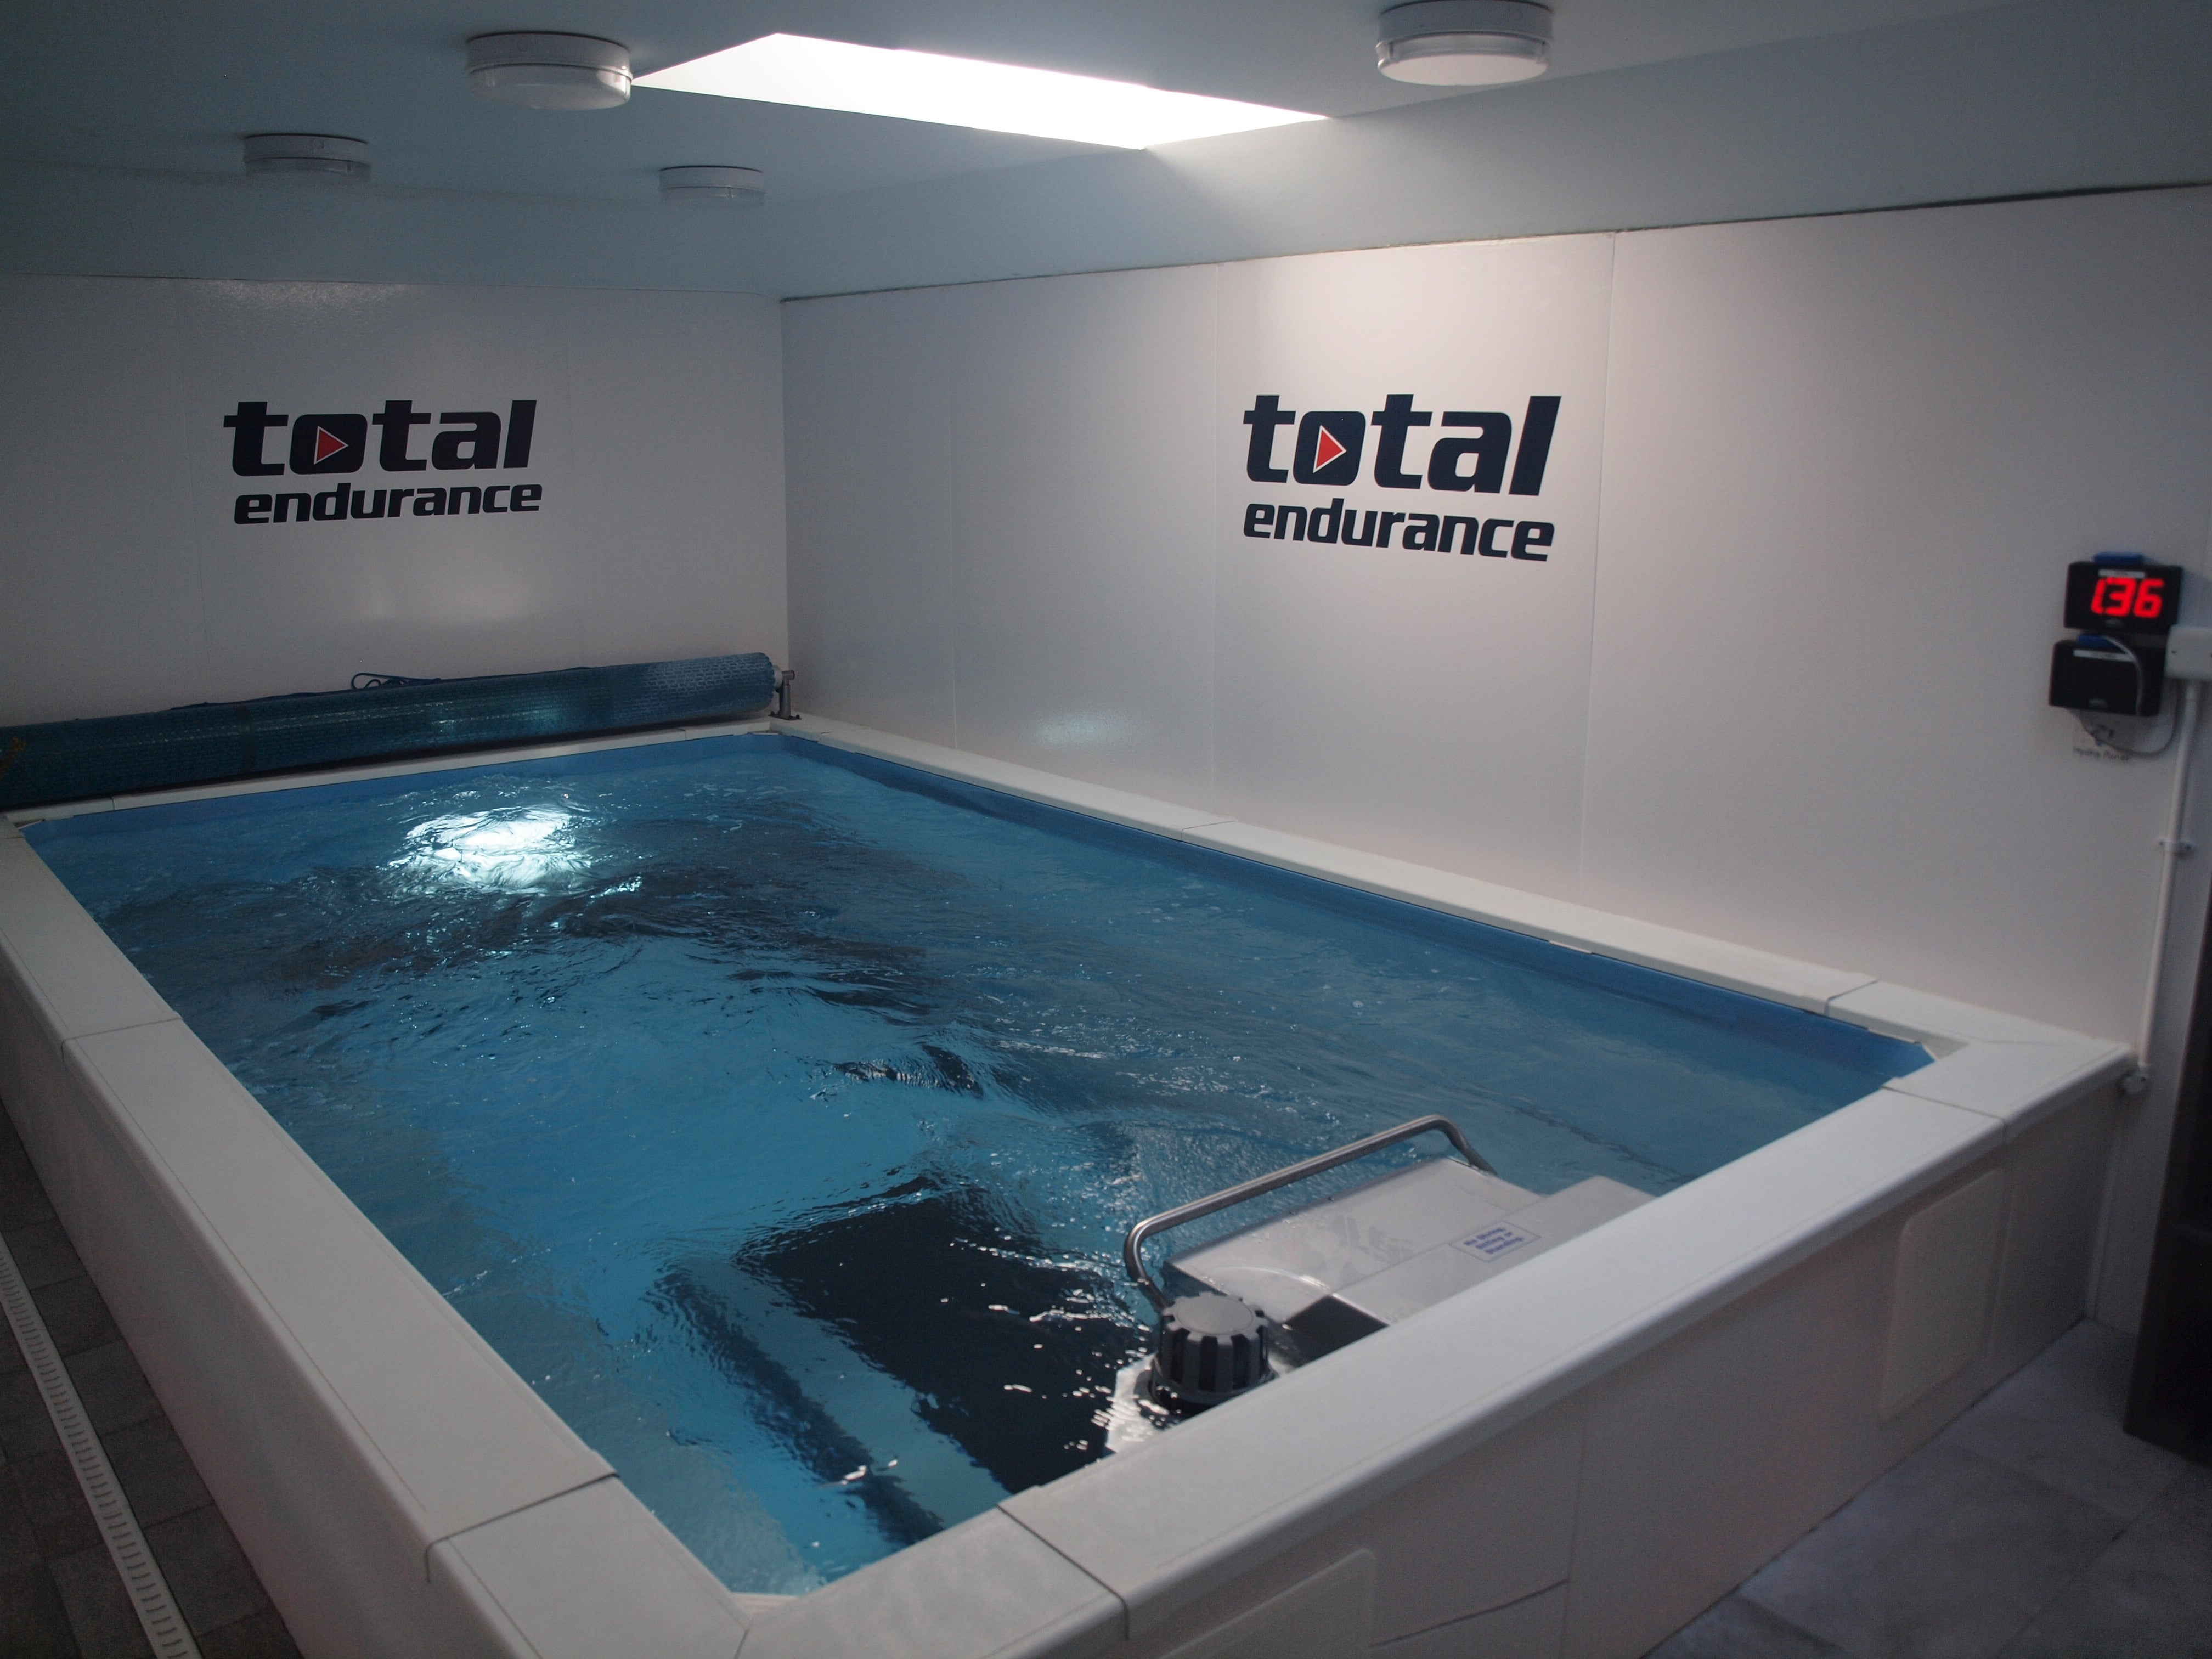 Total Endurance endless pool - 121 swim coaching and video analysis 